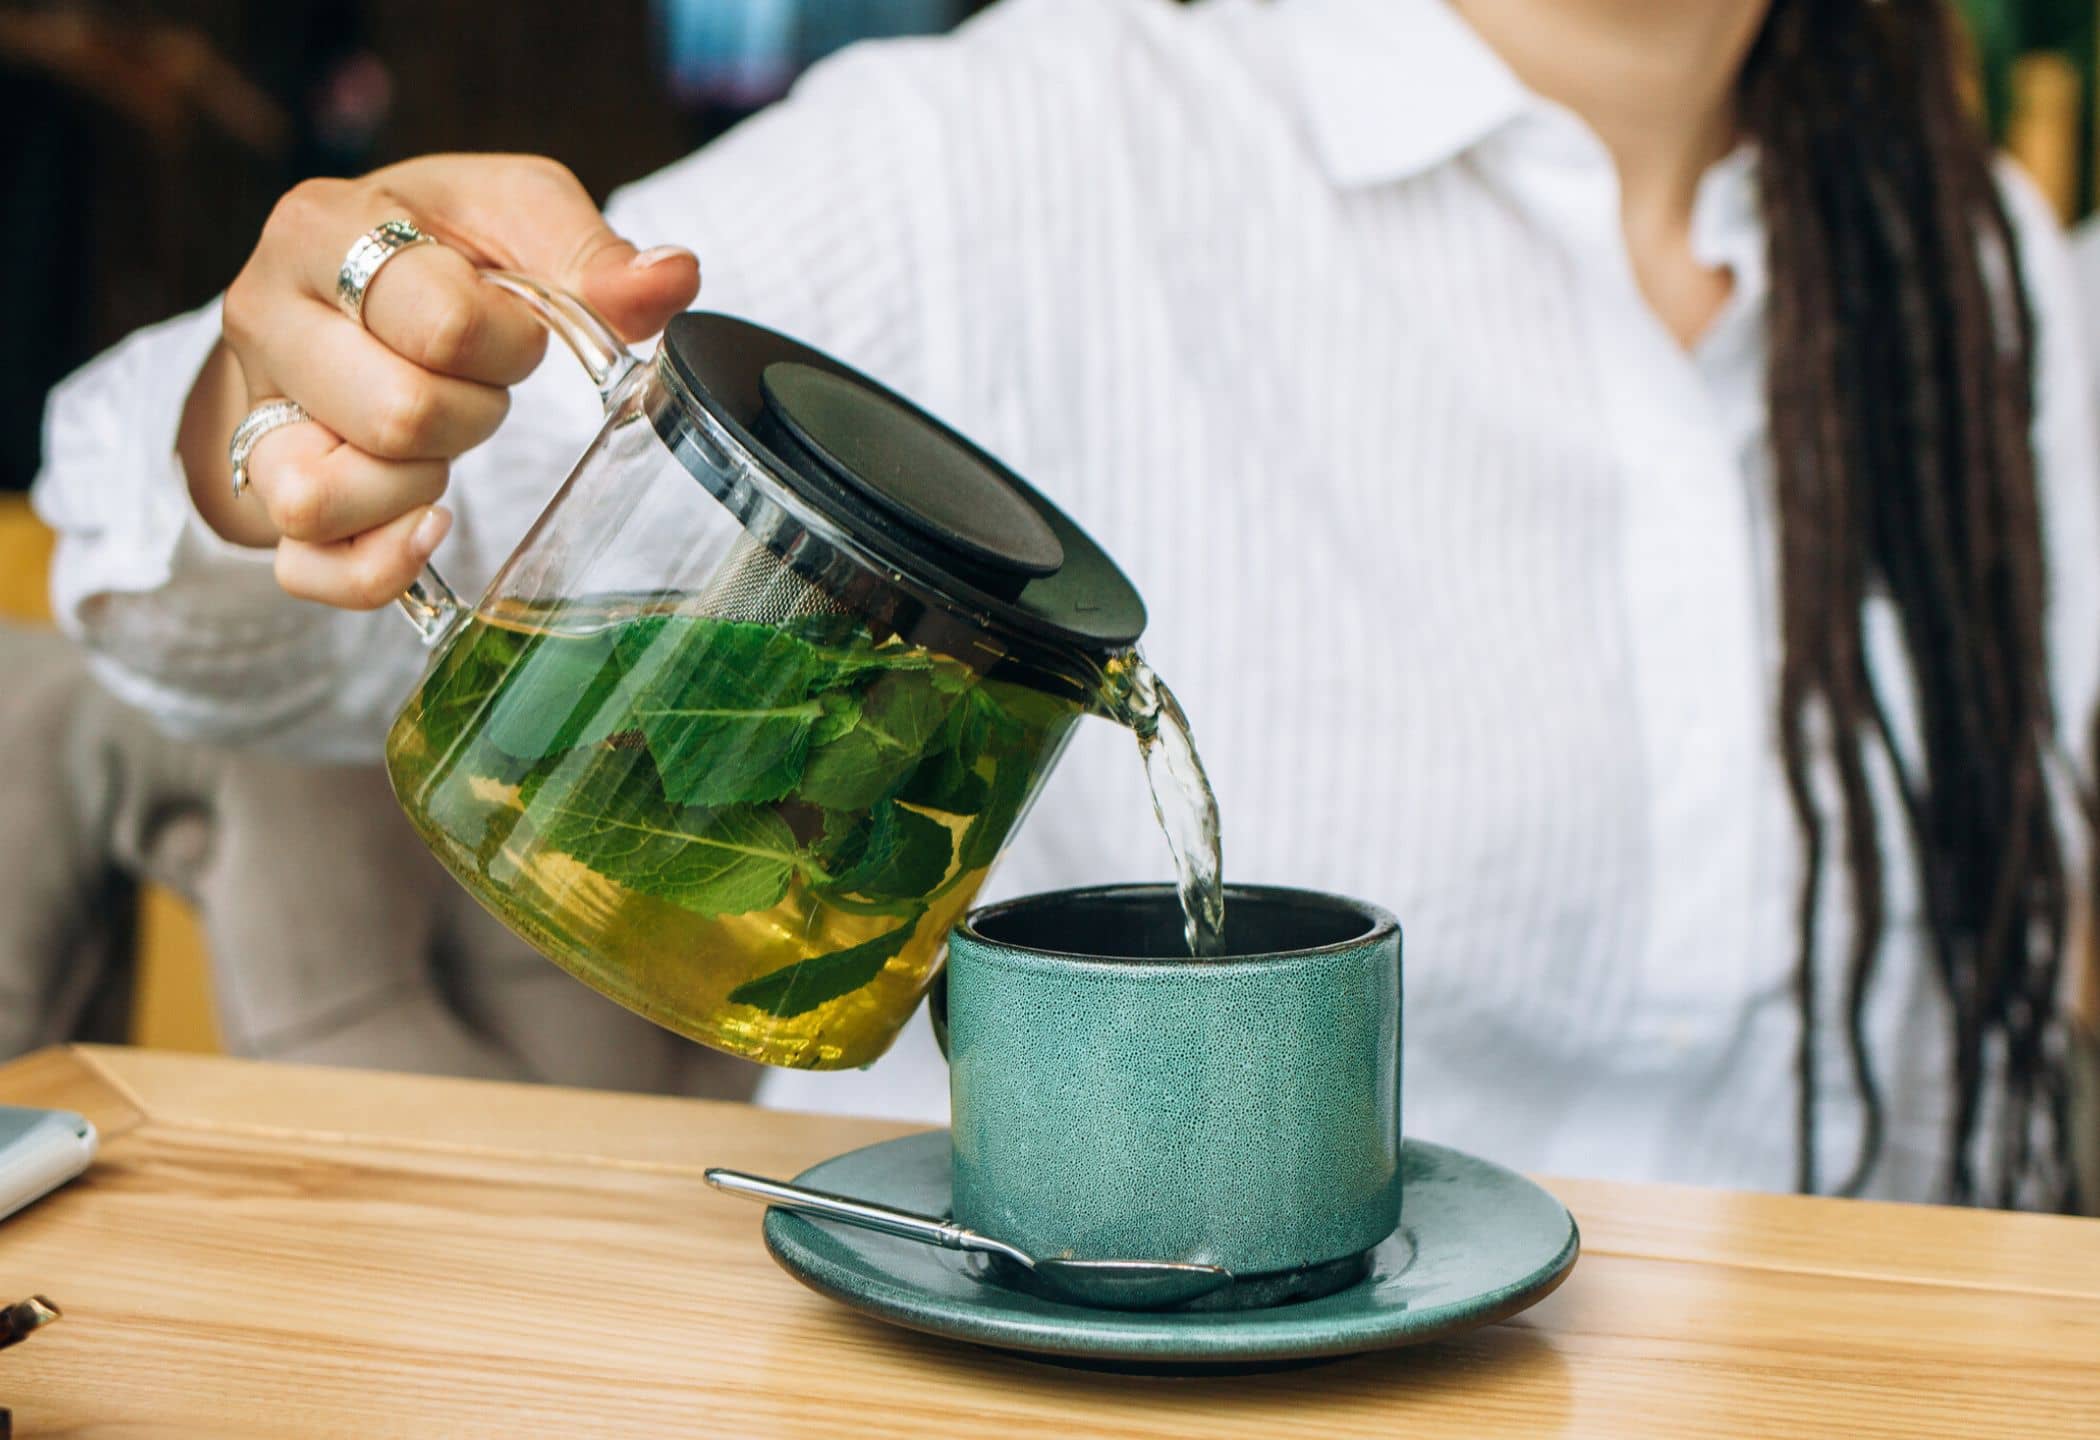 Oppassen Met Groene Thee Waarom oppassen met groene thee? Wie mag geen groene thee drinken?